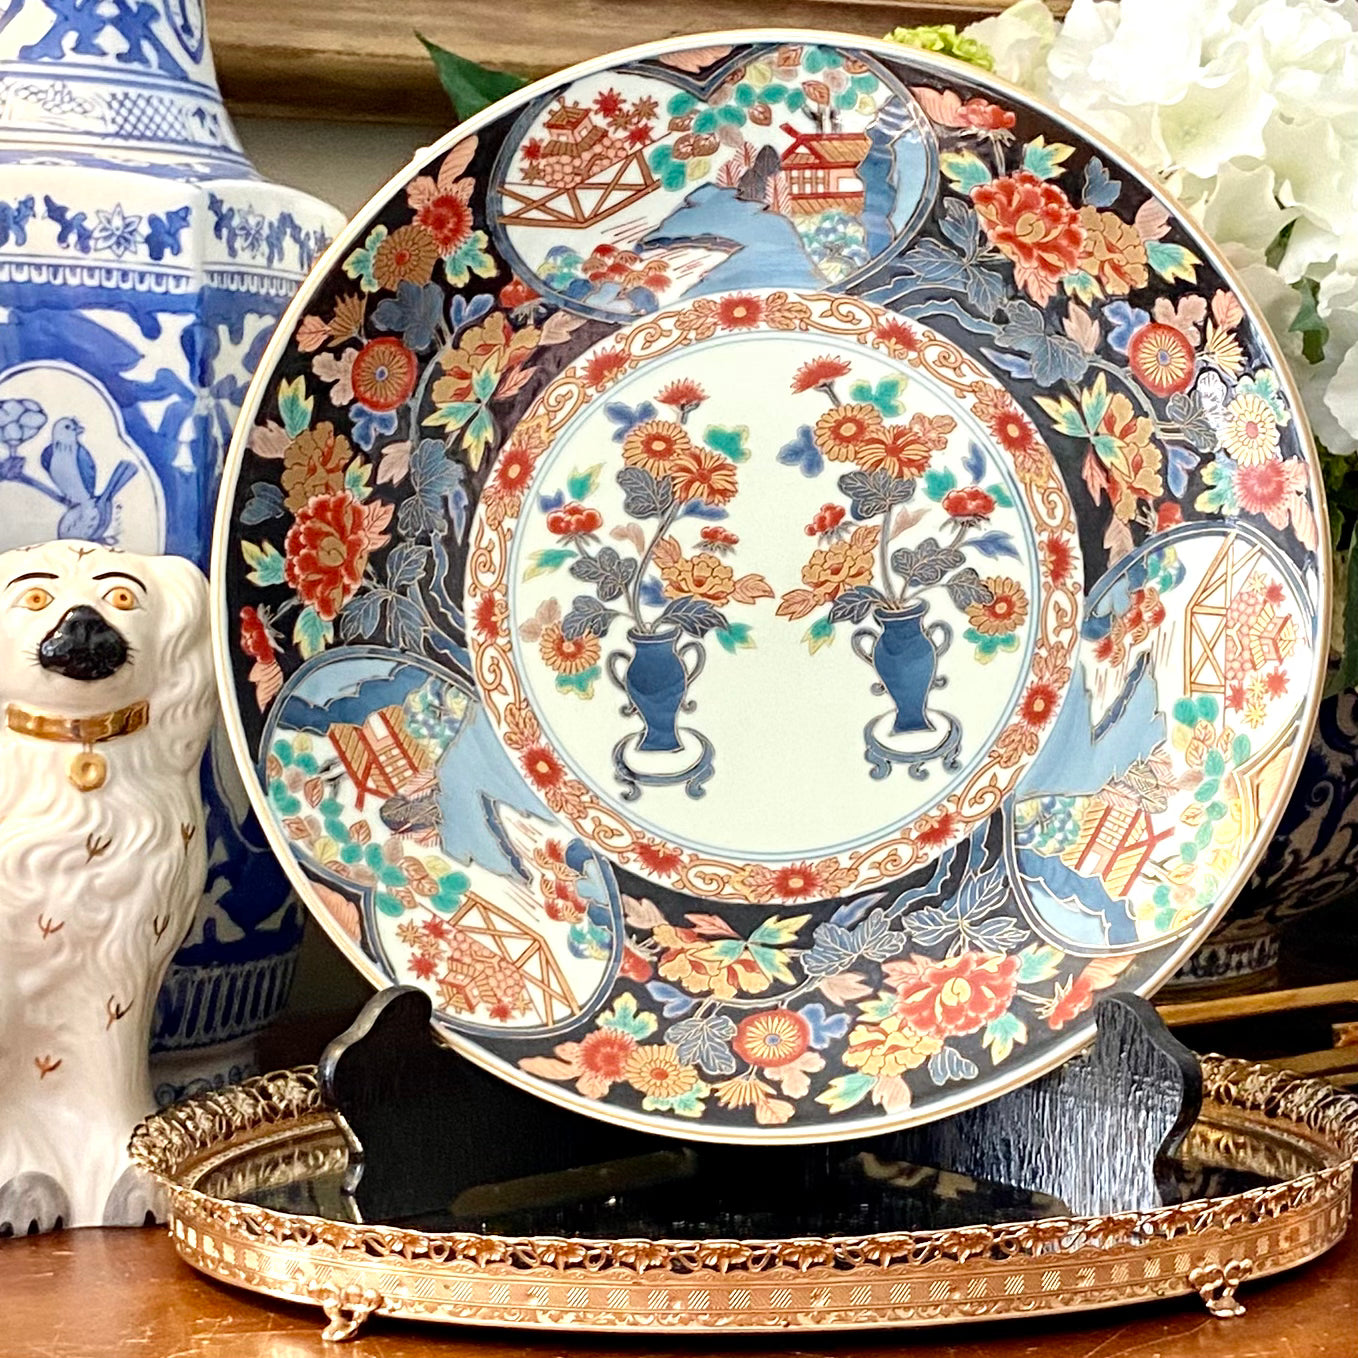 Stunning antique blue and white Imari style porcelain large platter